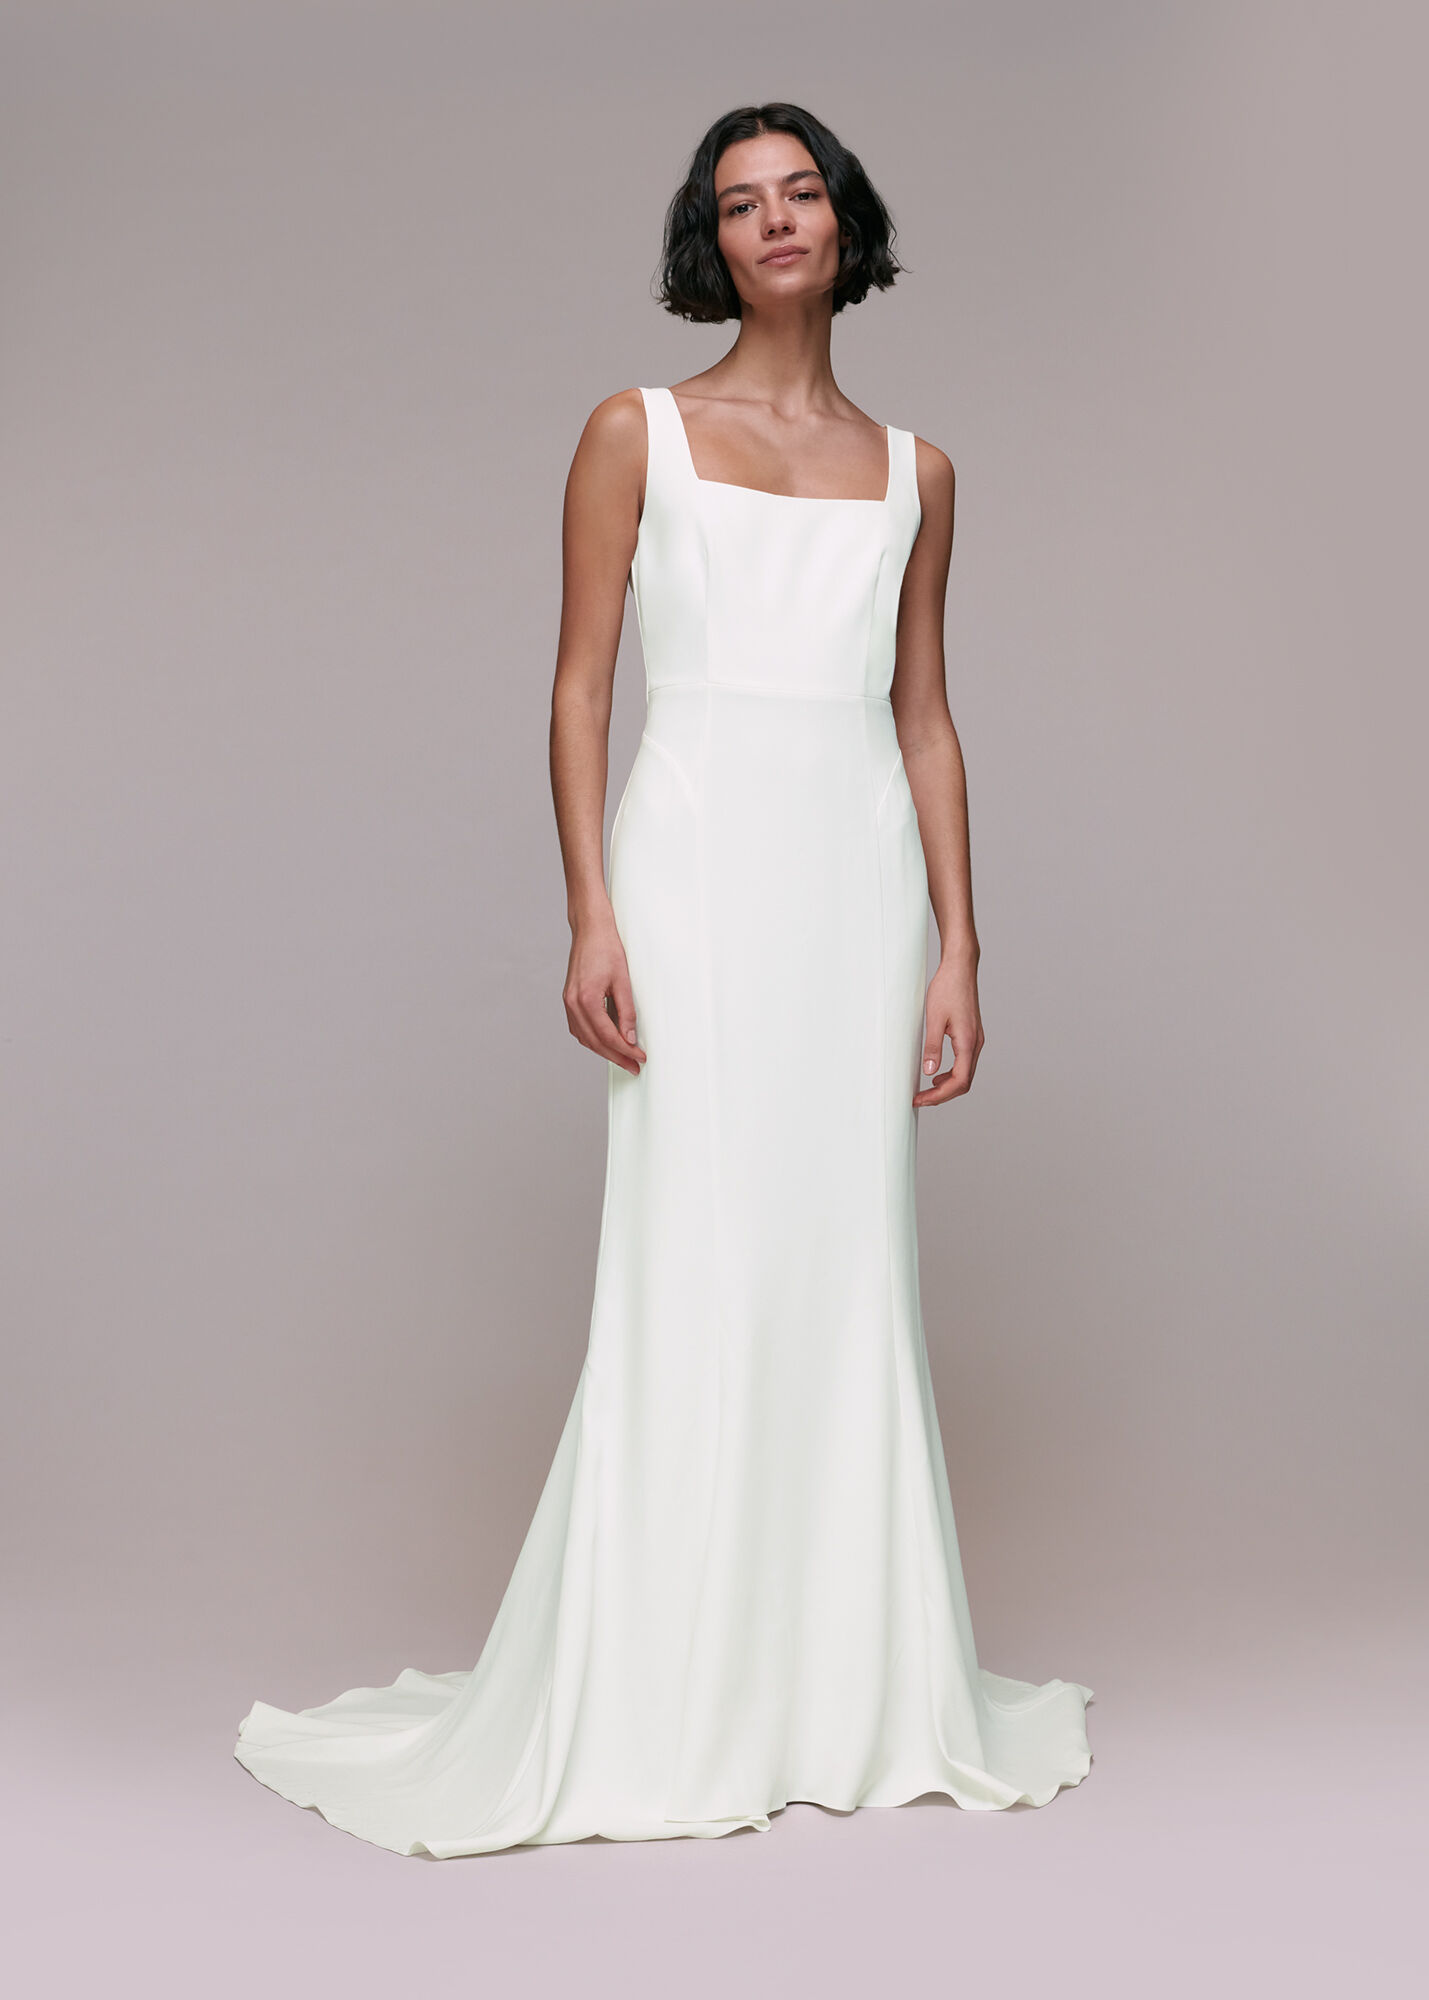 Sleek Sleeveless Bridal Gown | Free UK Shipping at Whistles